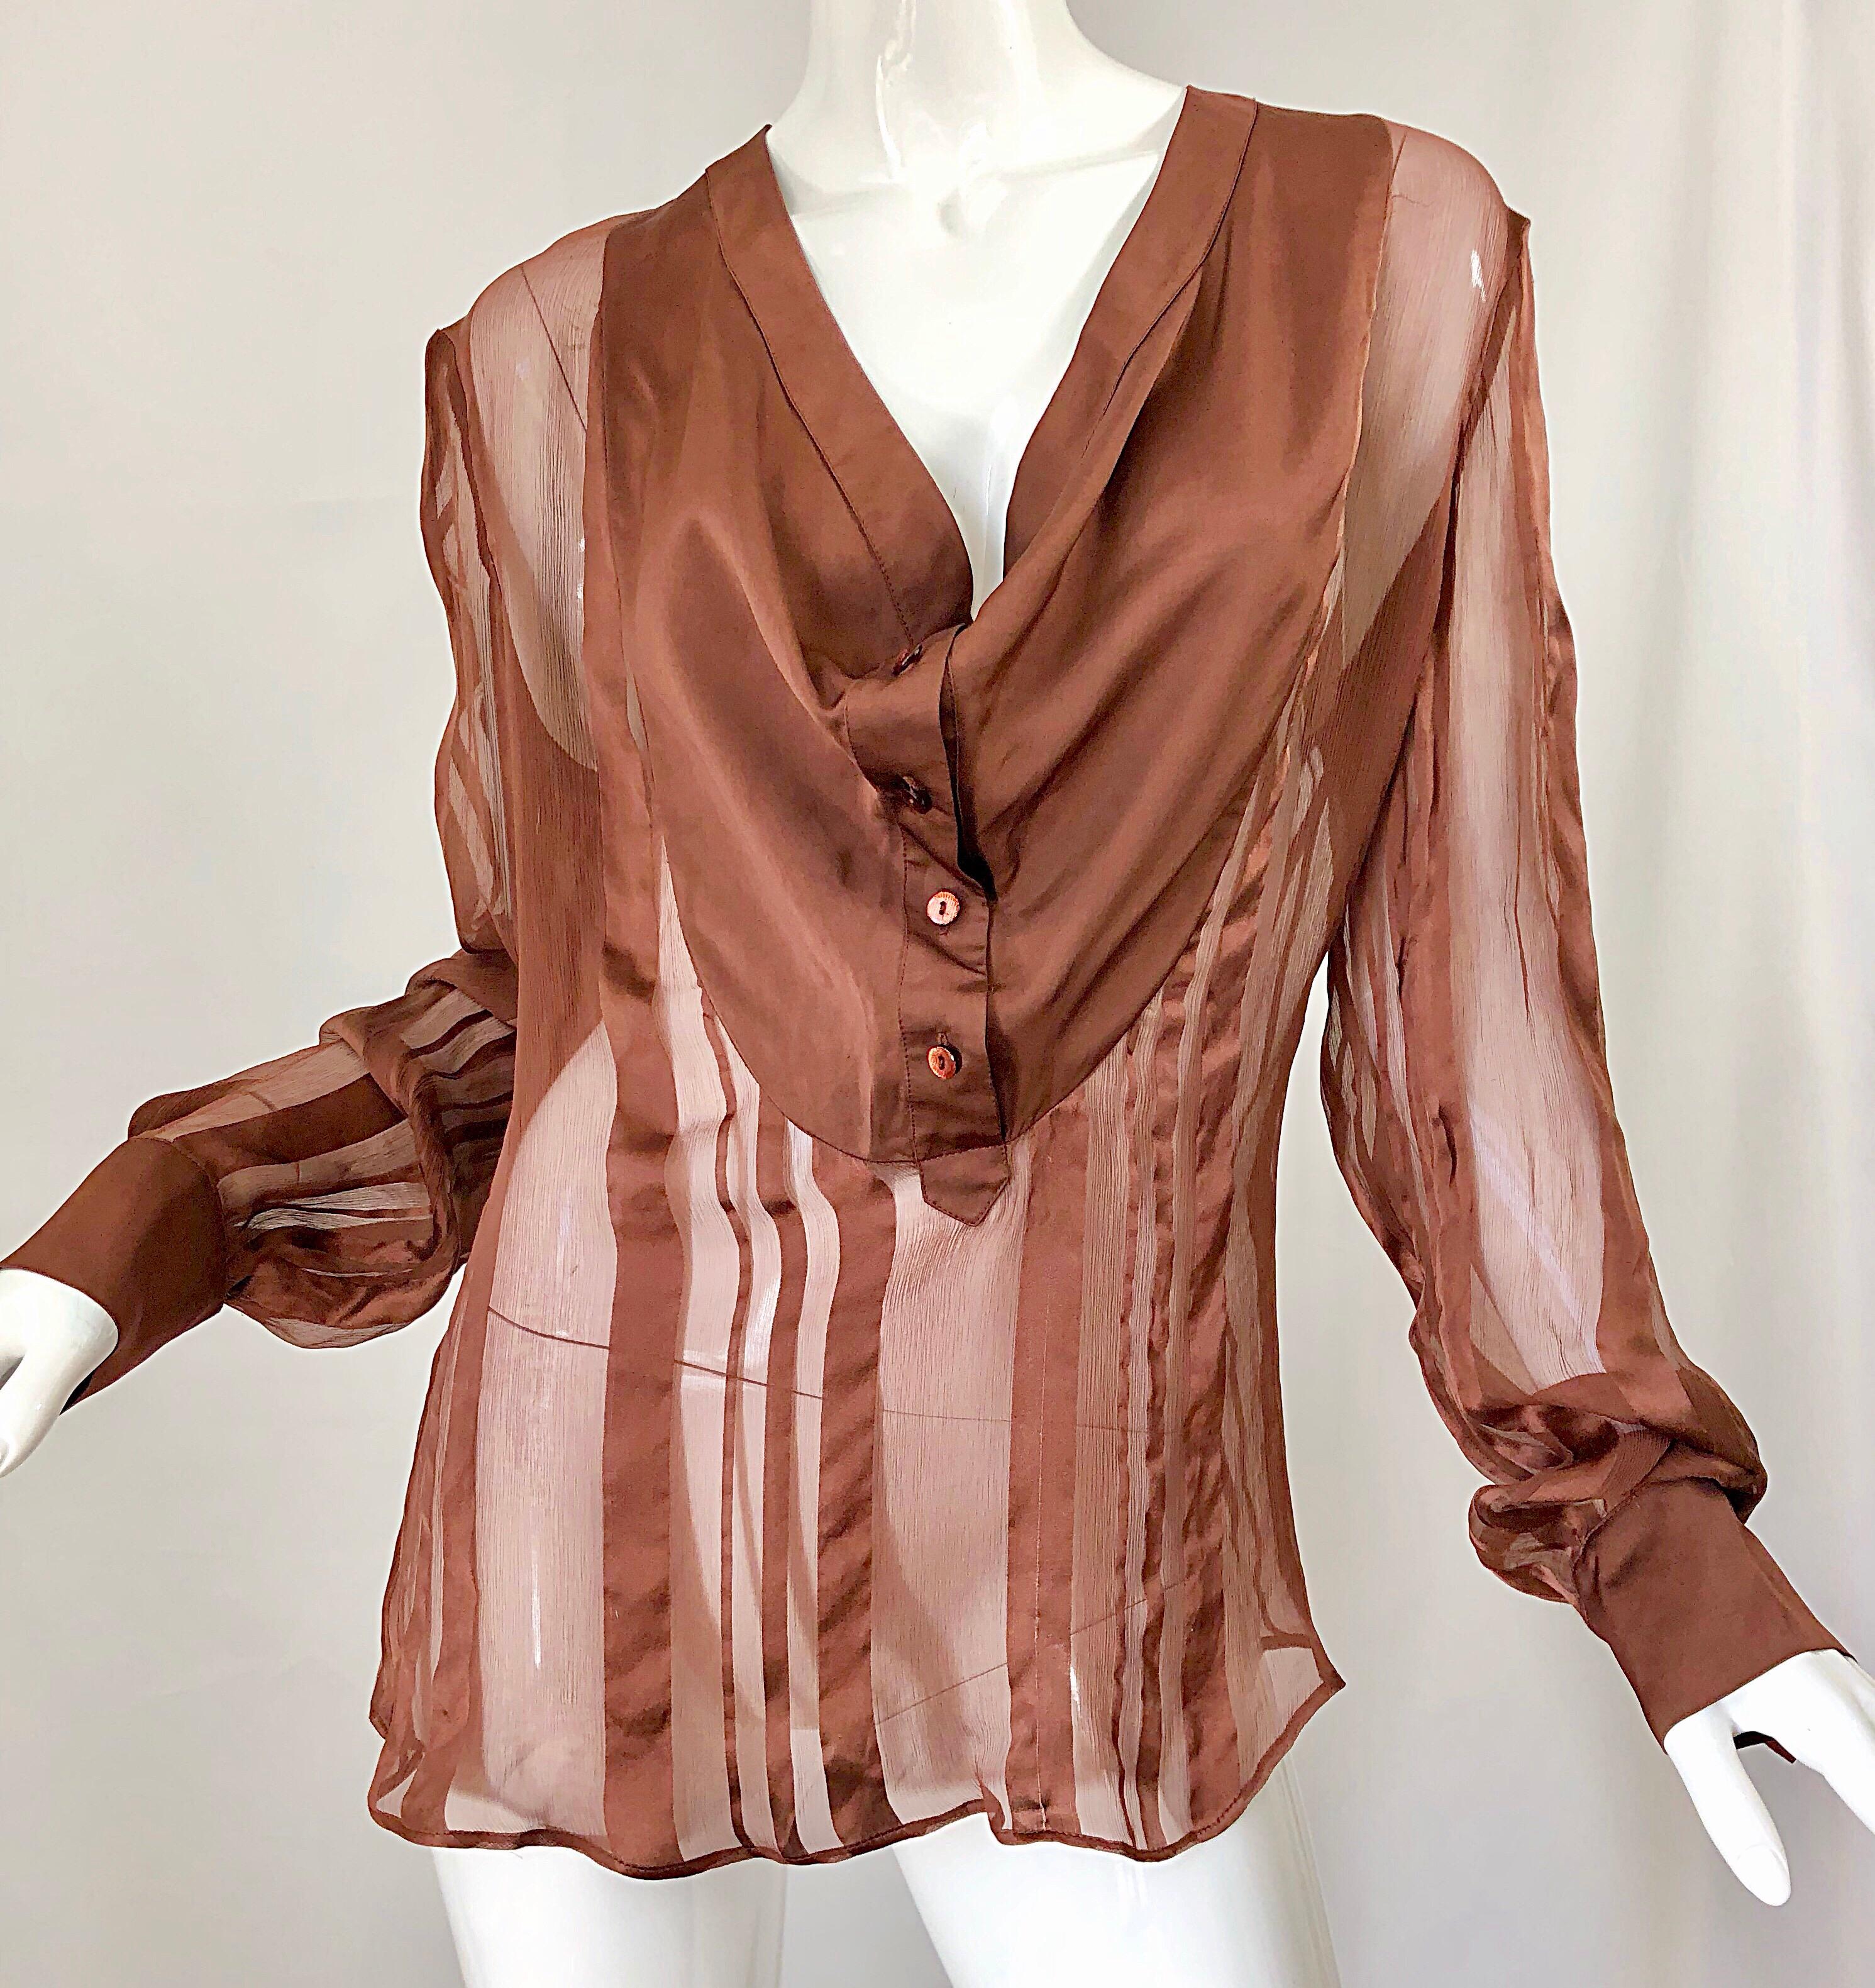 STELLA MCCARTNEY Rust Brown Silk Chiffon Avant Garde Semi Sheer Blouse Shirt Top 6